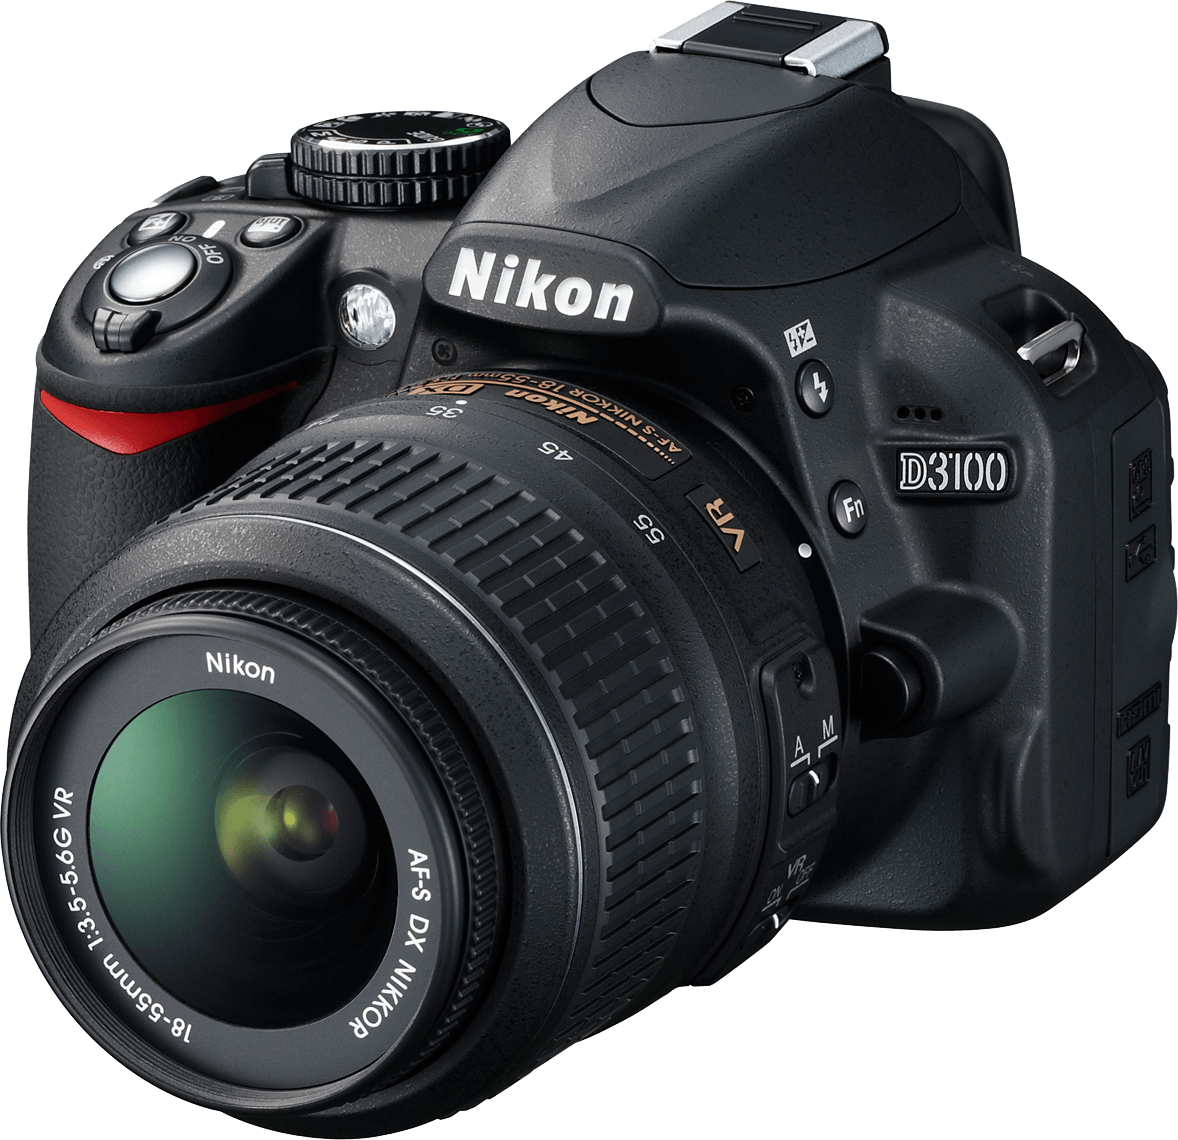 Nikon SLR camera, Product Kin